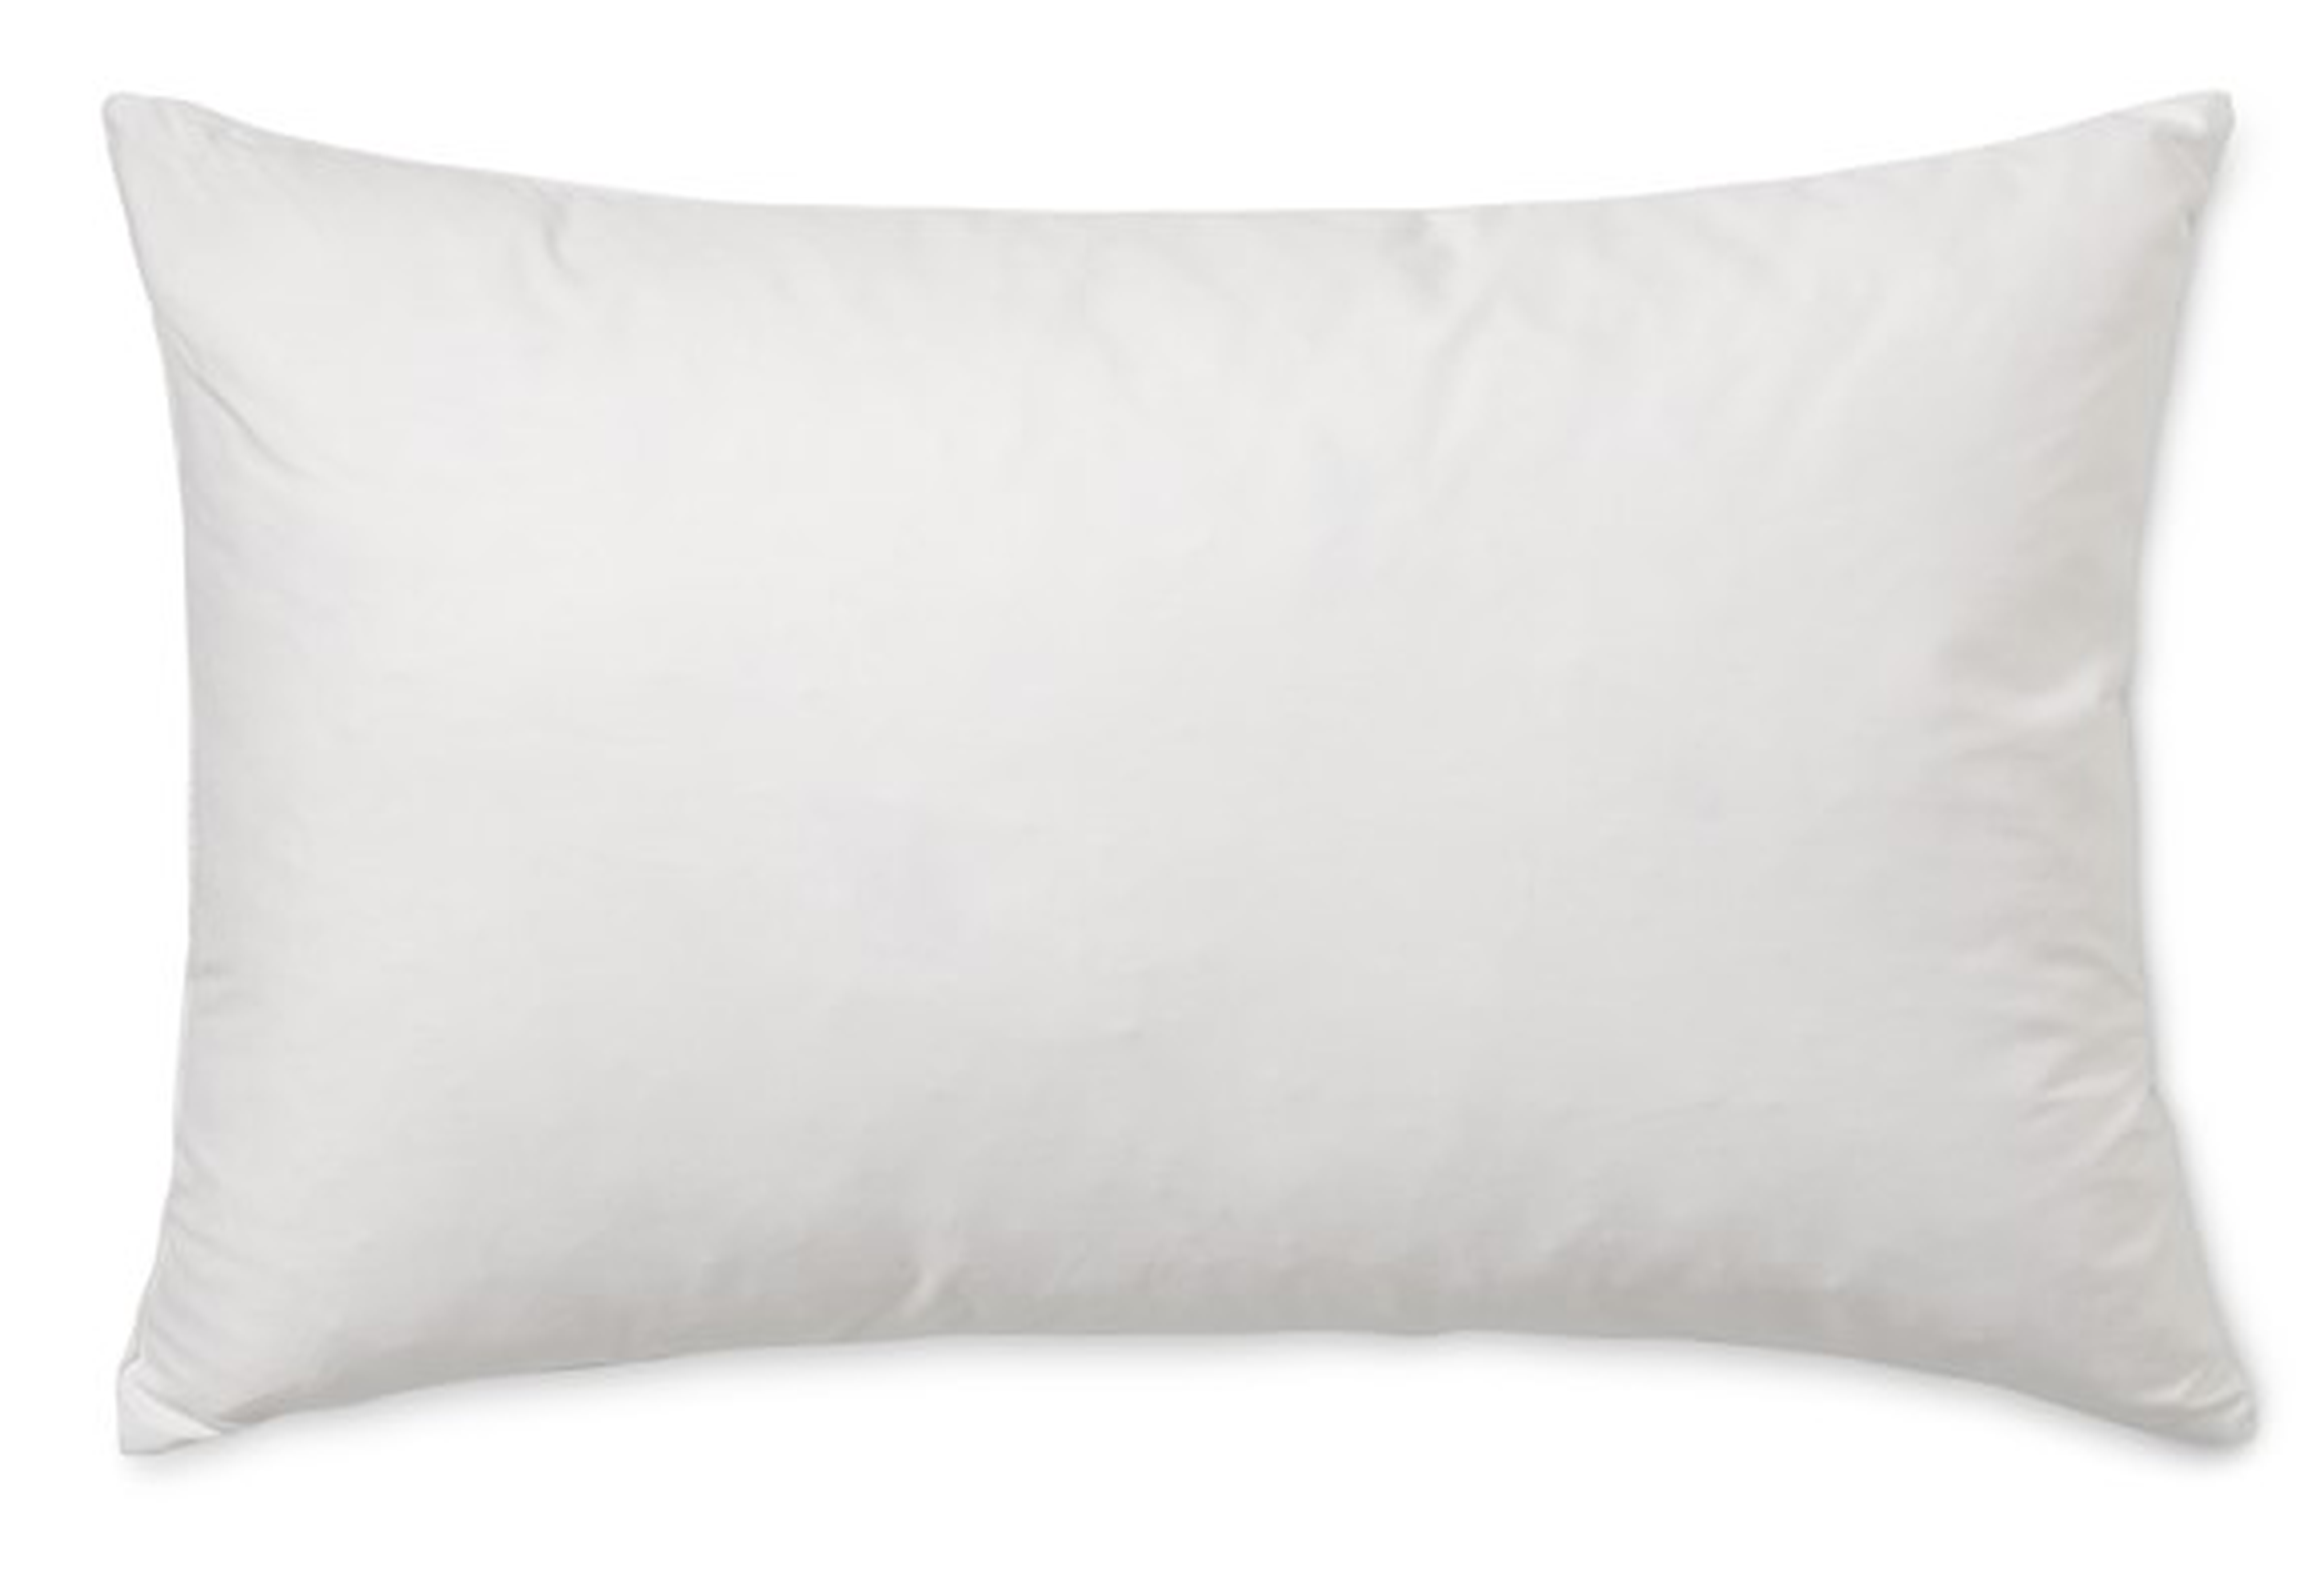 Decorative Pillow Insert 14"X22" - Williams Sonoma Home